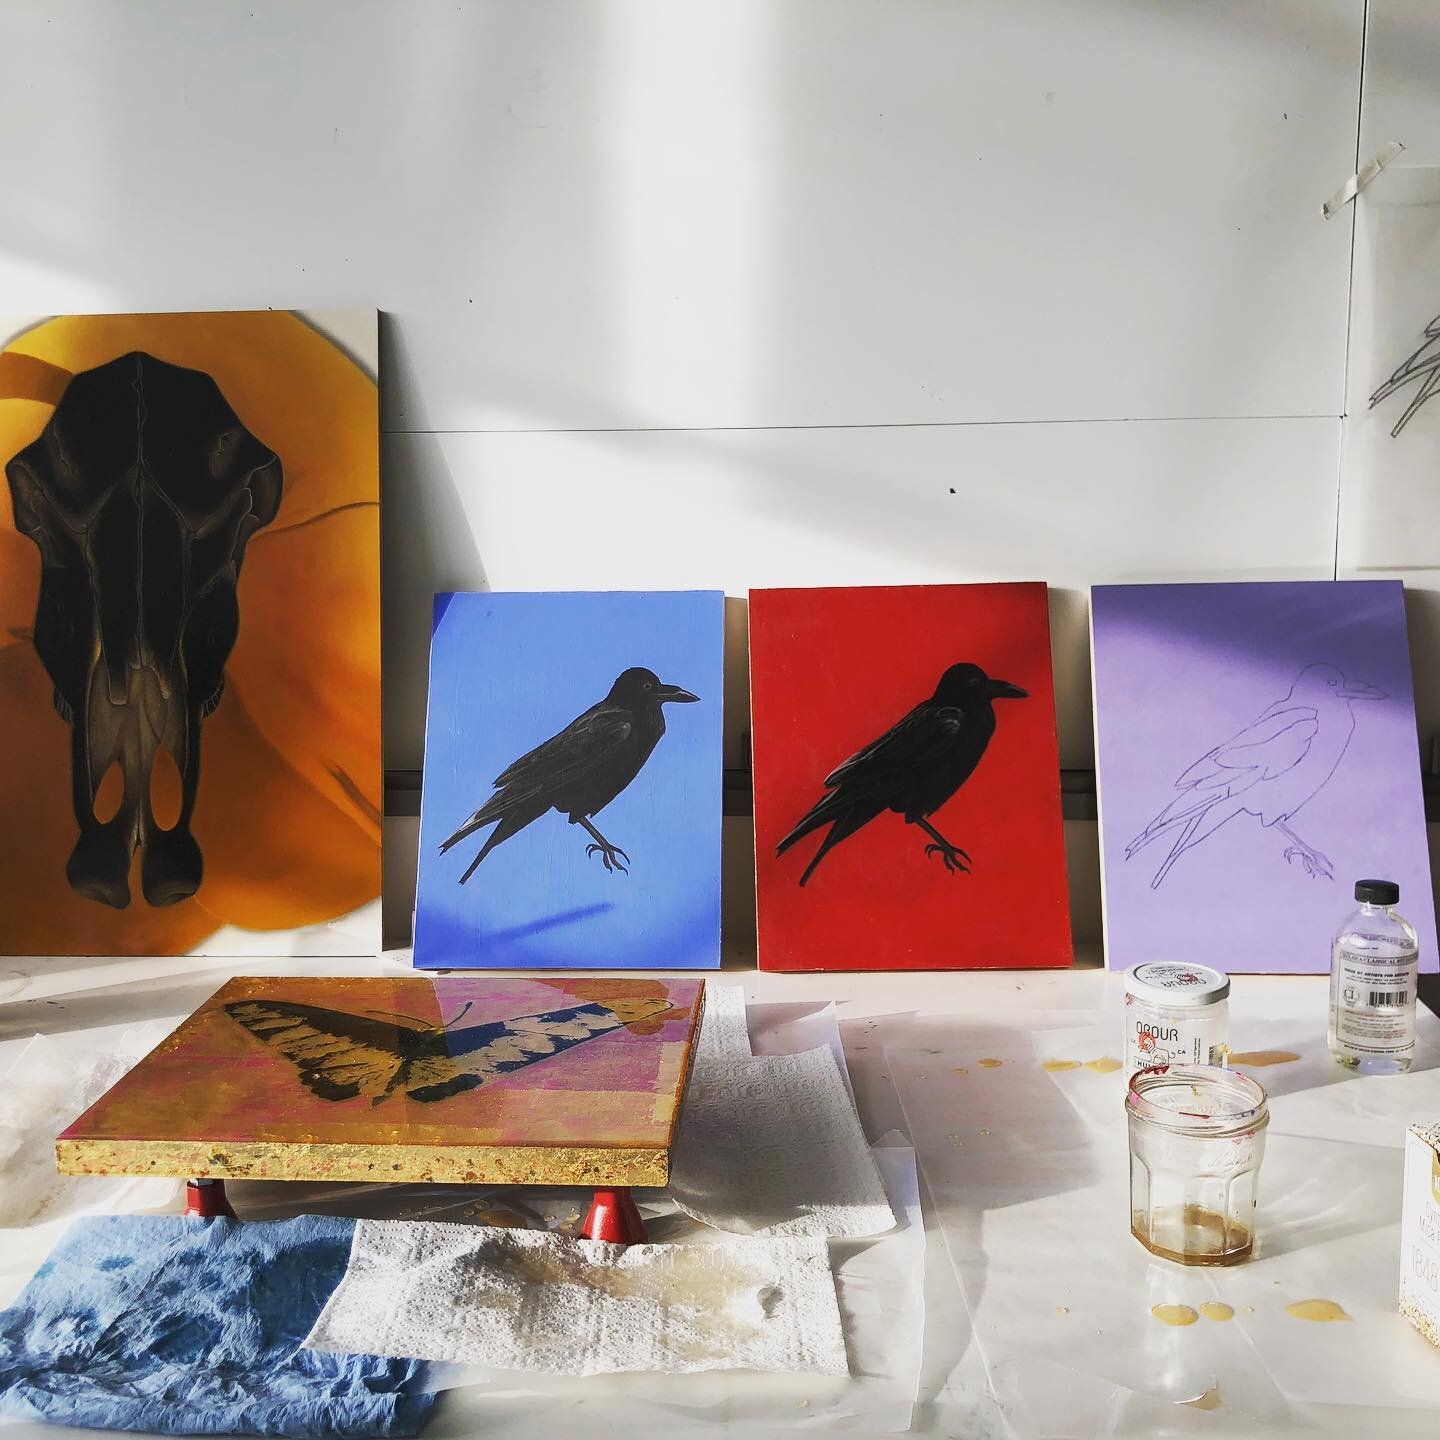 Works in progress in my new studio. Enjoying the natural light! @rryan069

#crows #corvids #artstudio #artexplosionsf #artexplosionstudios